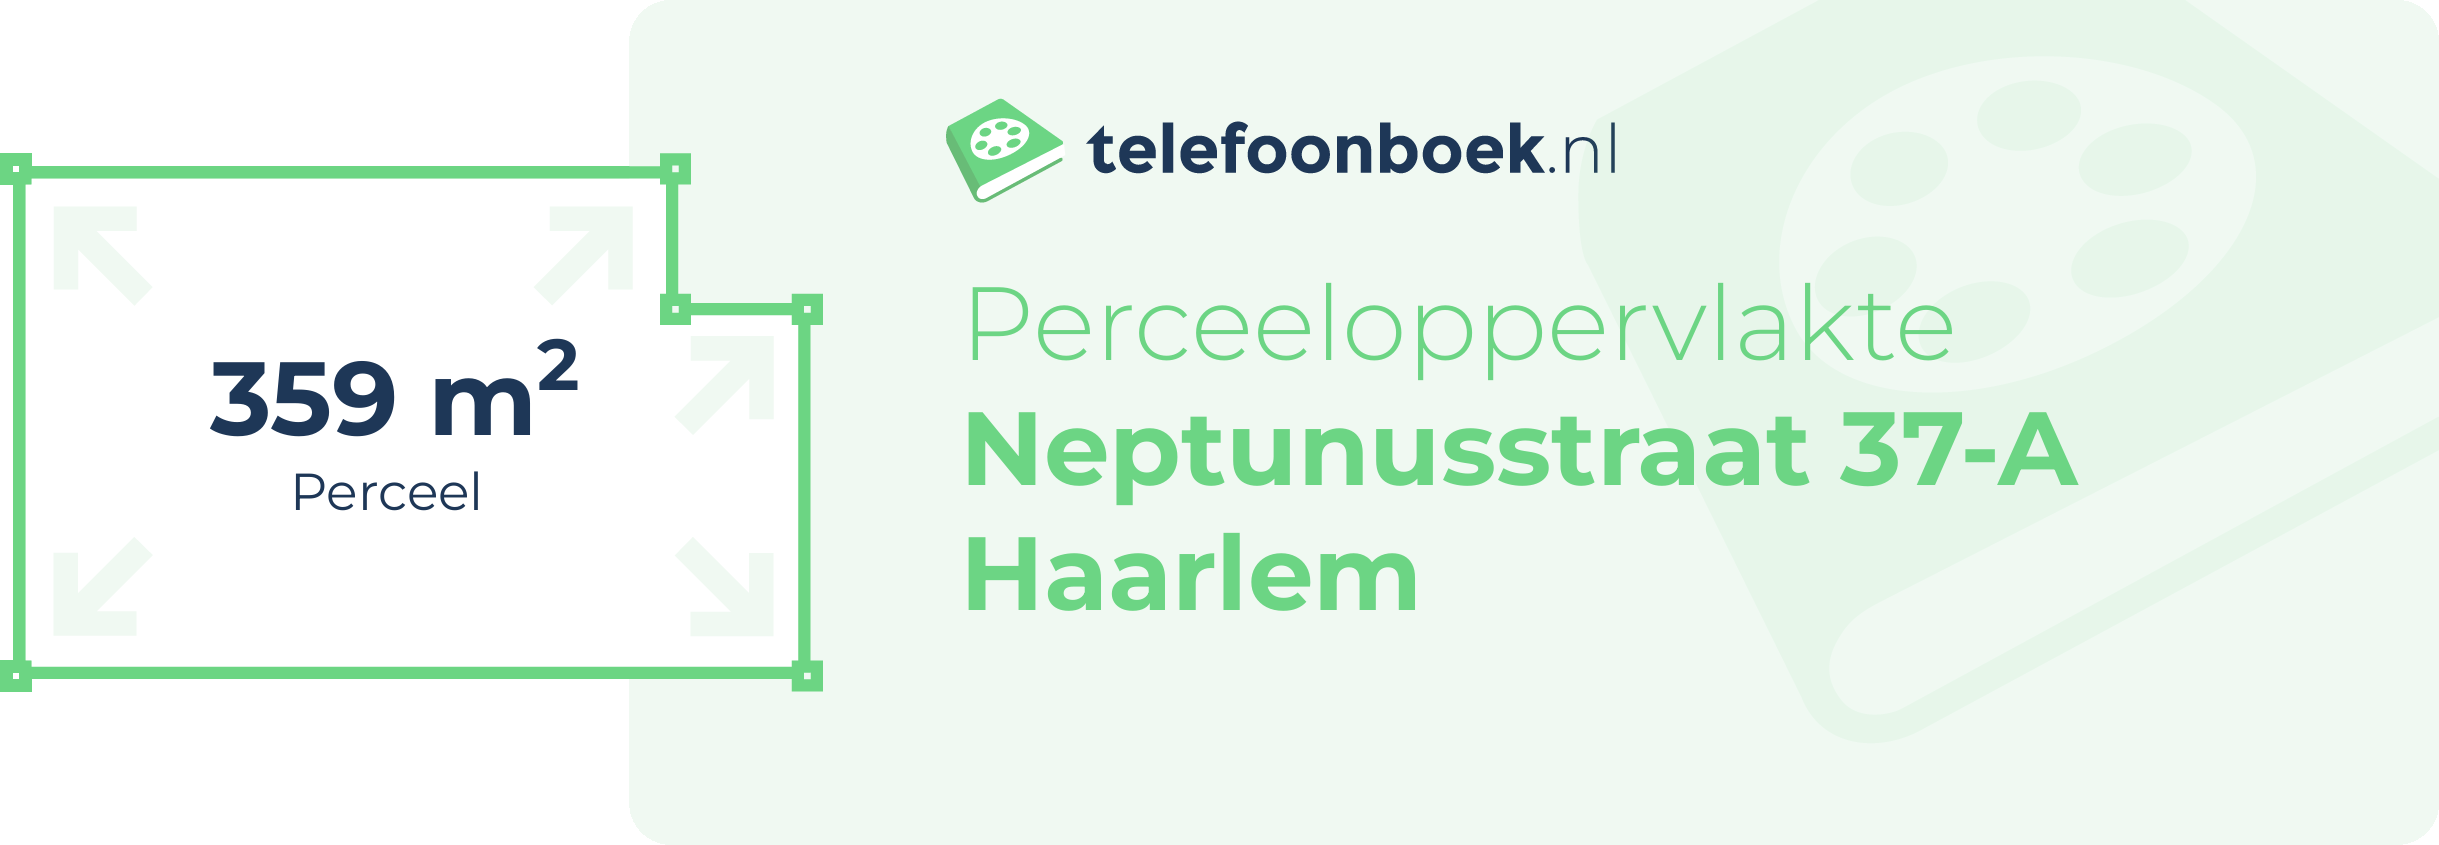 Perceeloppervlakte Neptunusstraat 37-A Haarlem